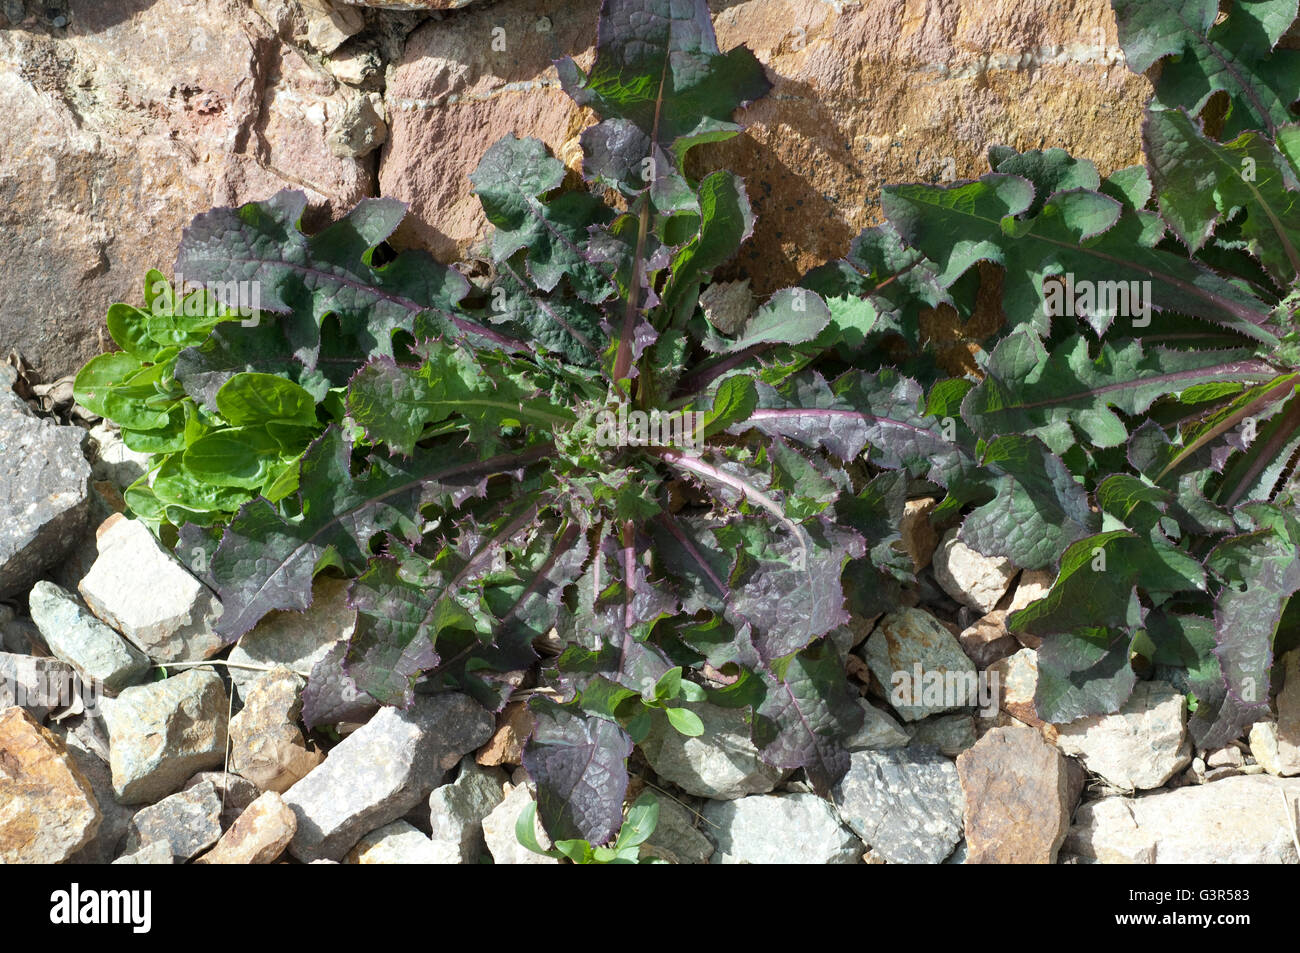 Kohldistel, Jungpflanze, Sonchus oleraceus Foto Stock